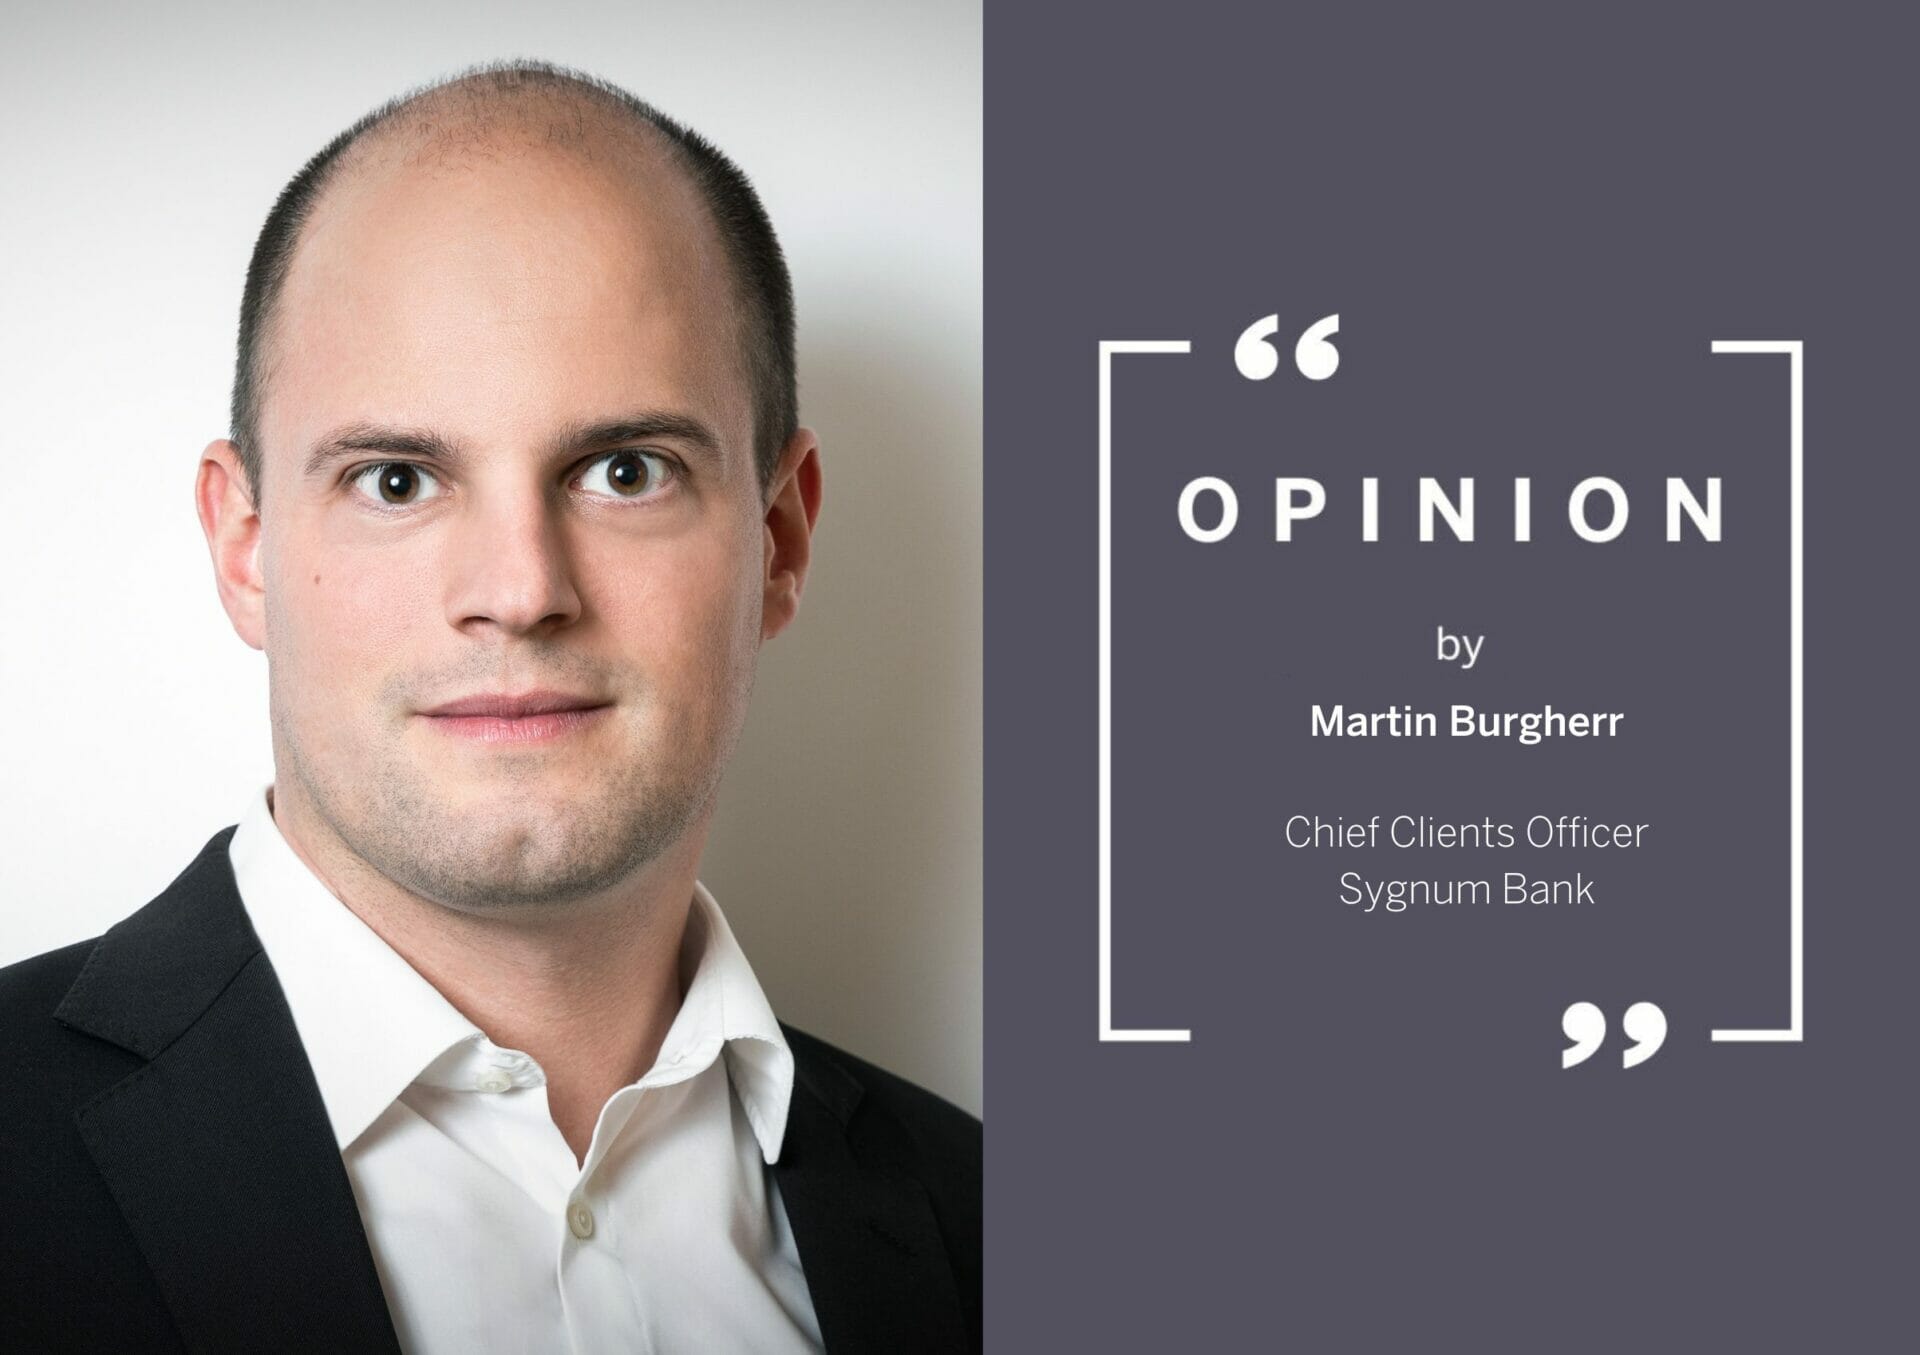 Opinion - Martin Burgherr